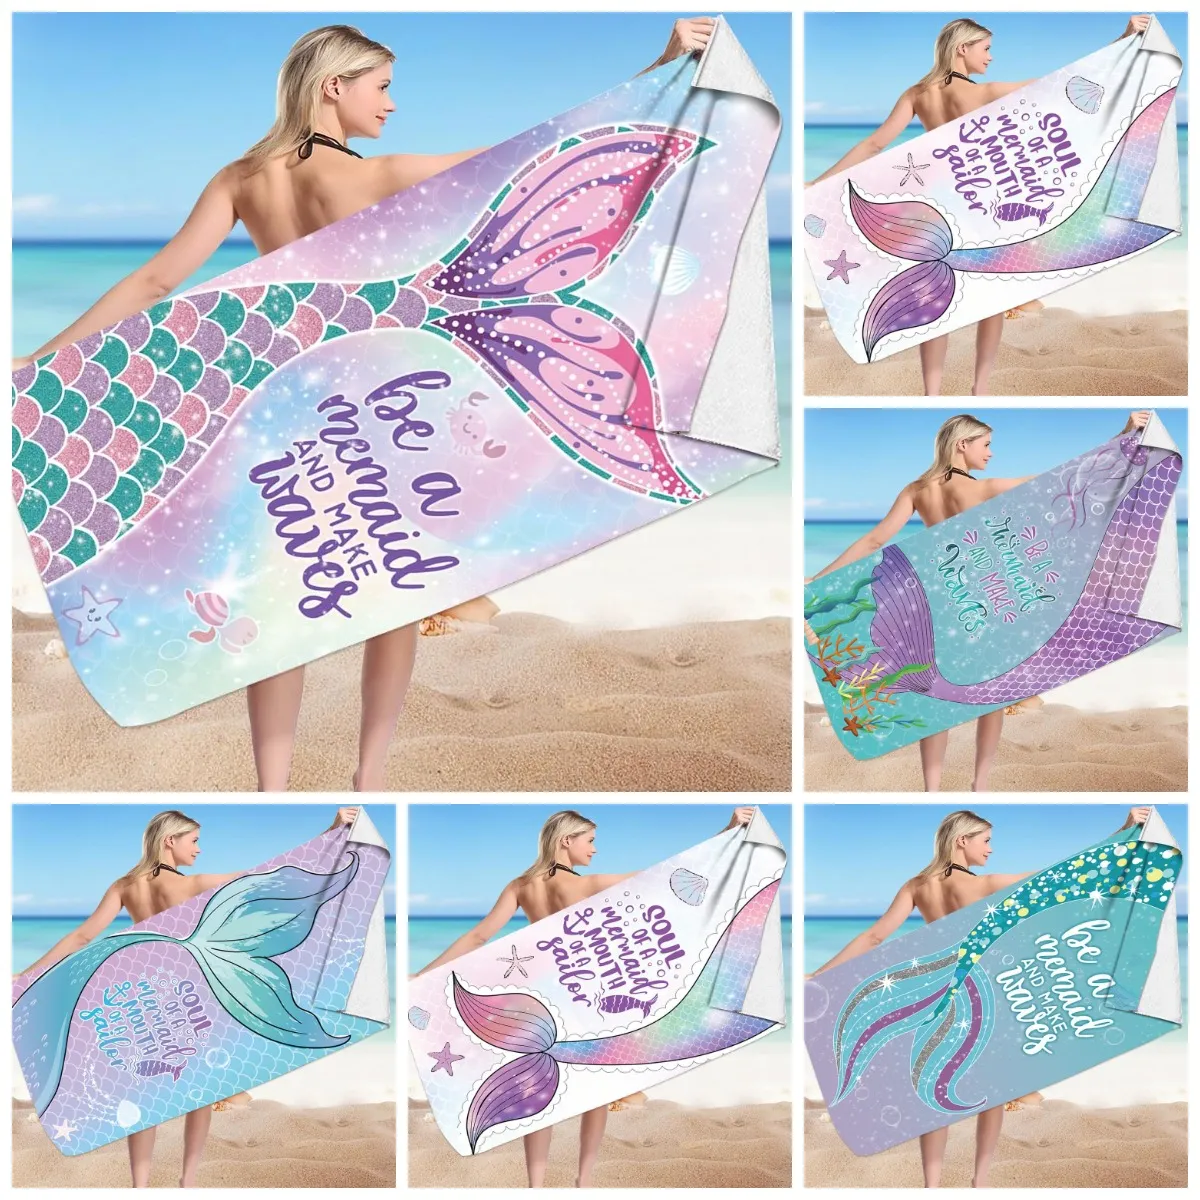 Mermaid Beach Handtücher 3D -Druck Mikrofaser Absorbierende Badetücher Rechteckige 75x150 cm Erwachsene Kinderbadhandtuch Großhandel GROSSE